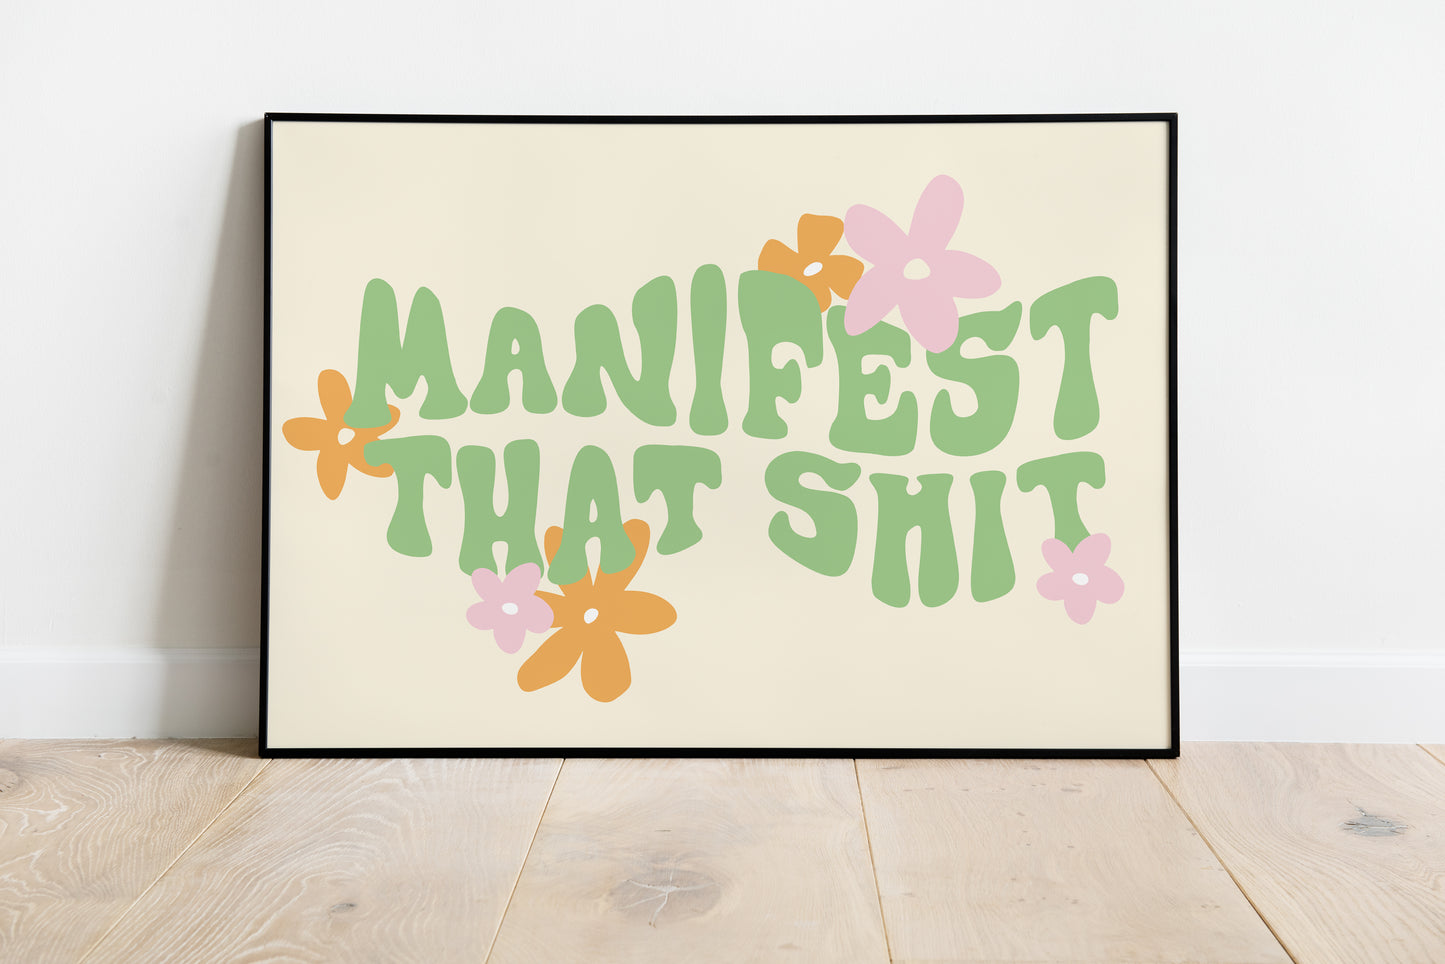 Manifest That Shit Print